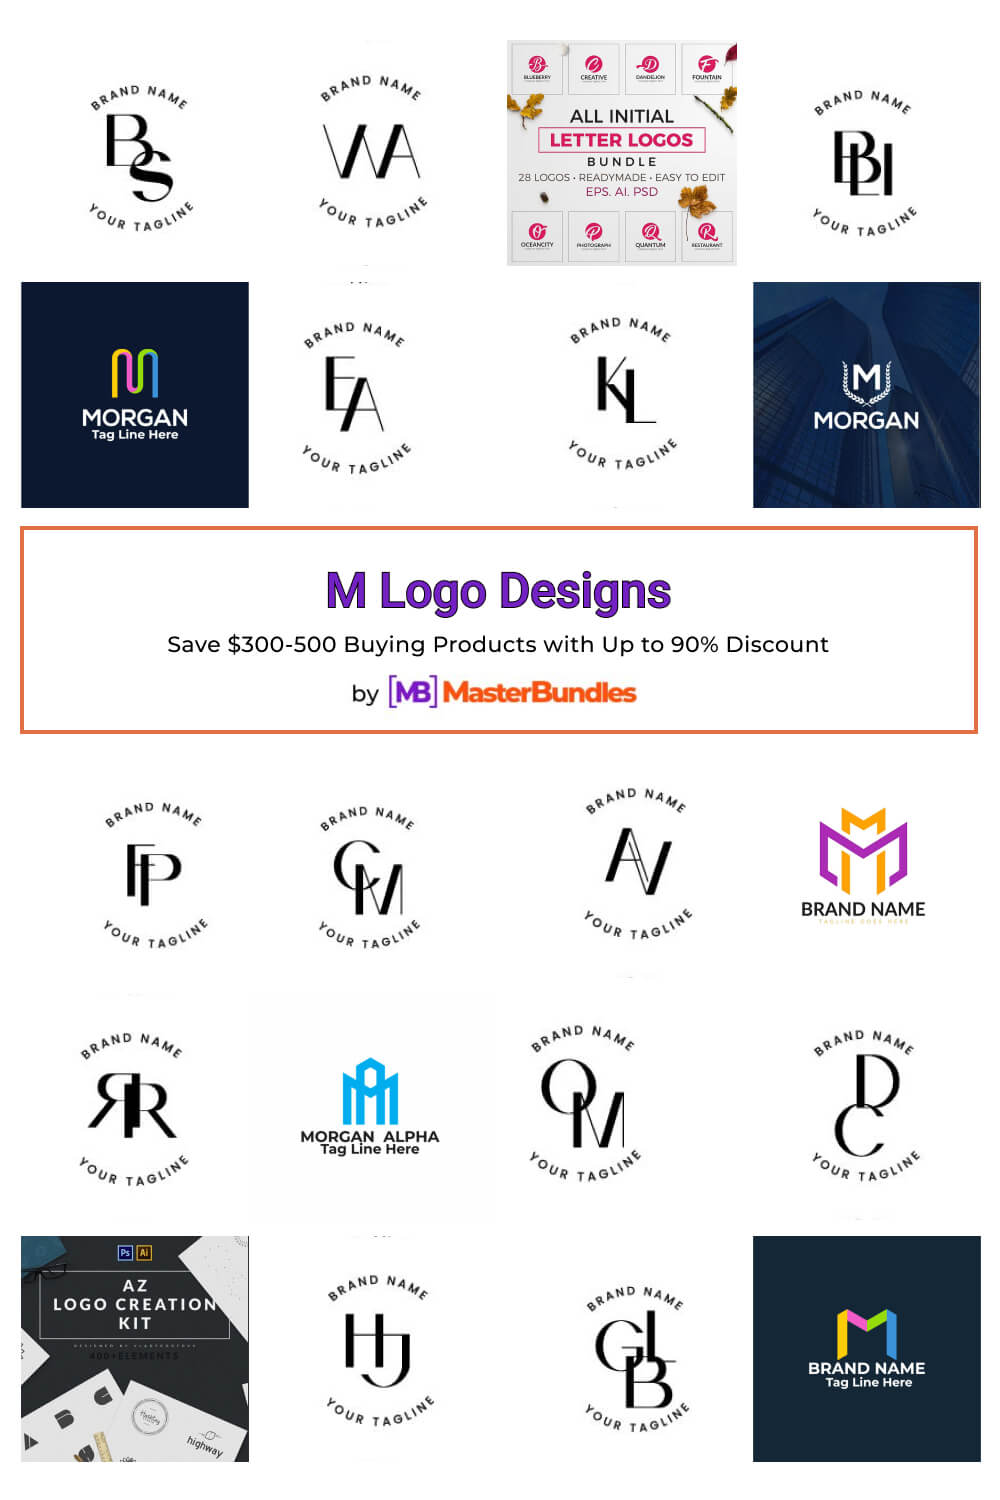 m logo designs pinterest image.